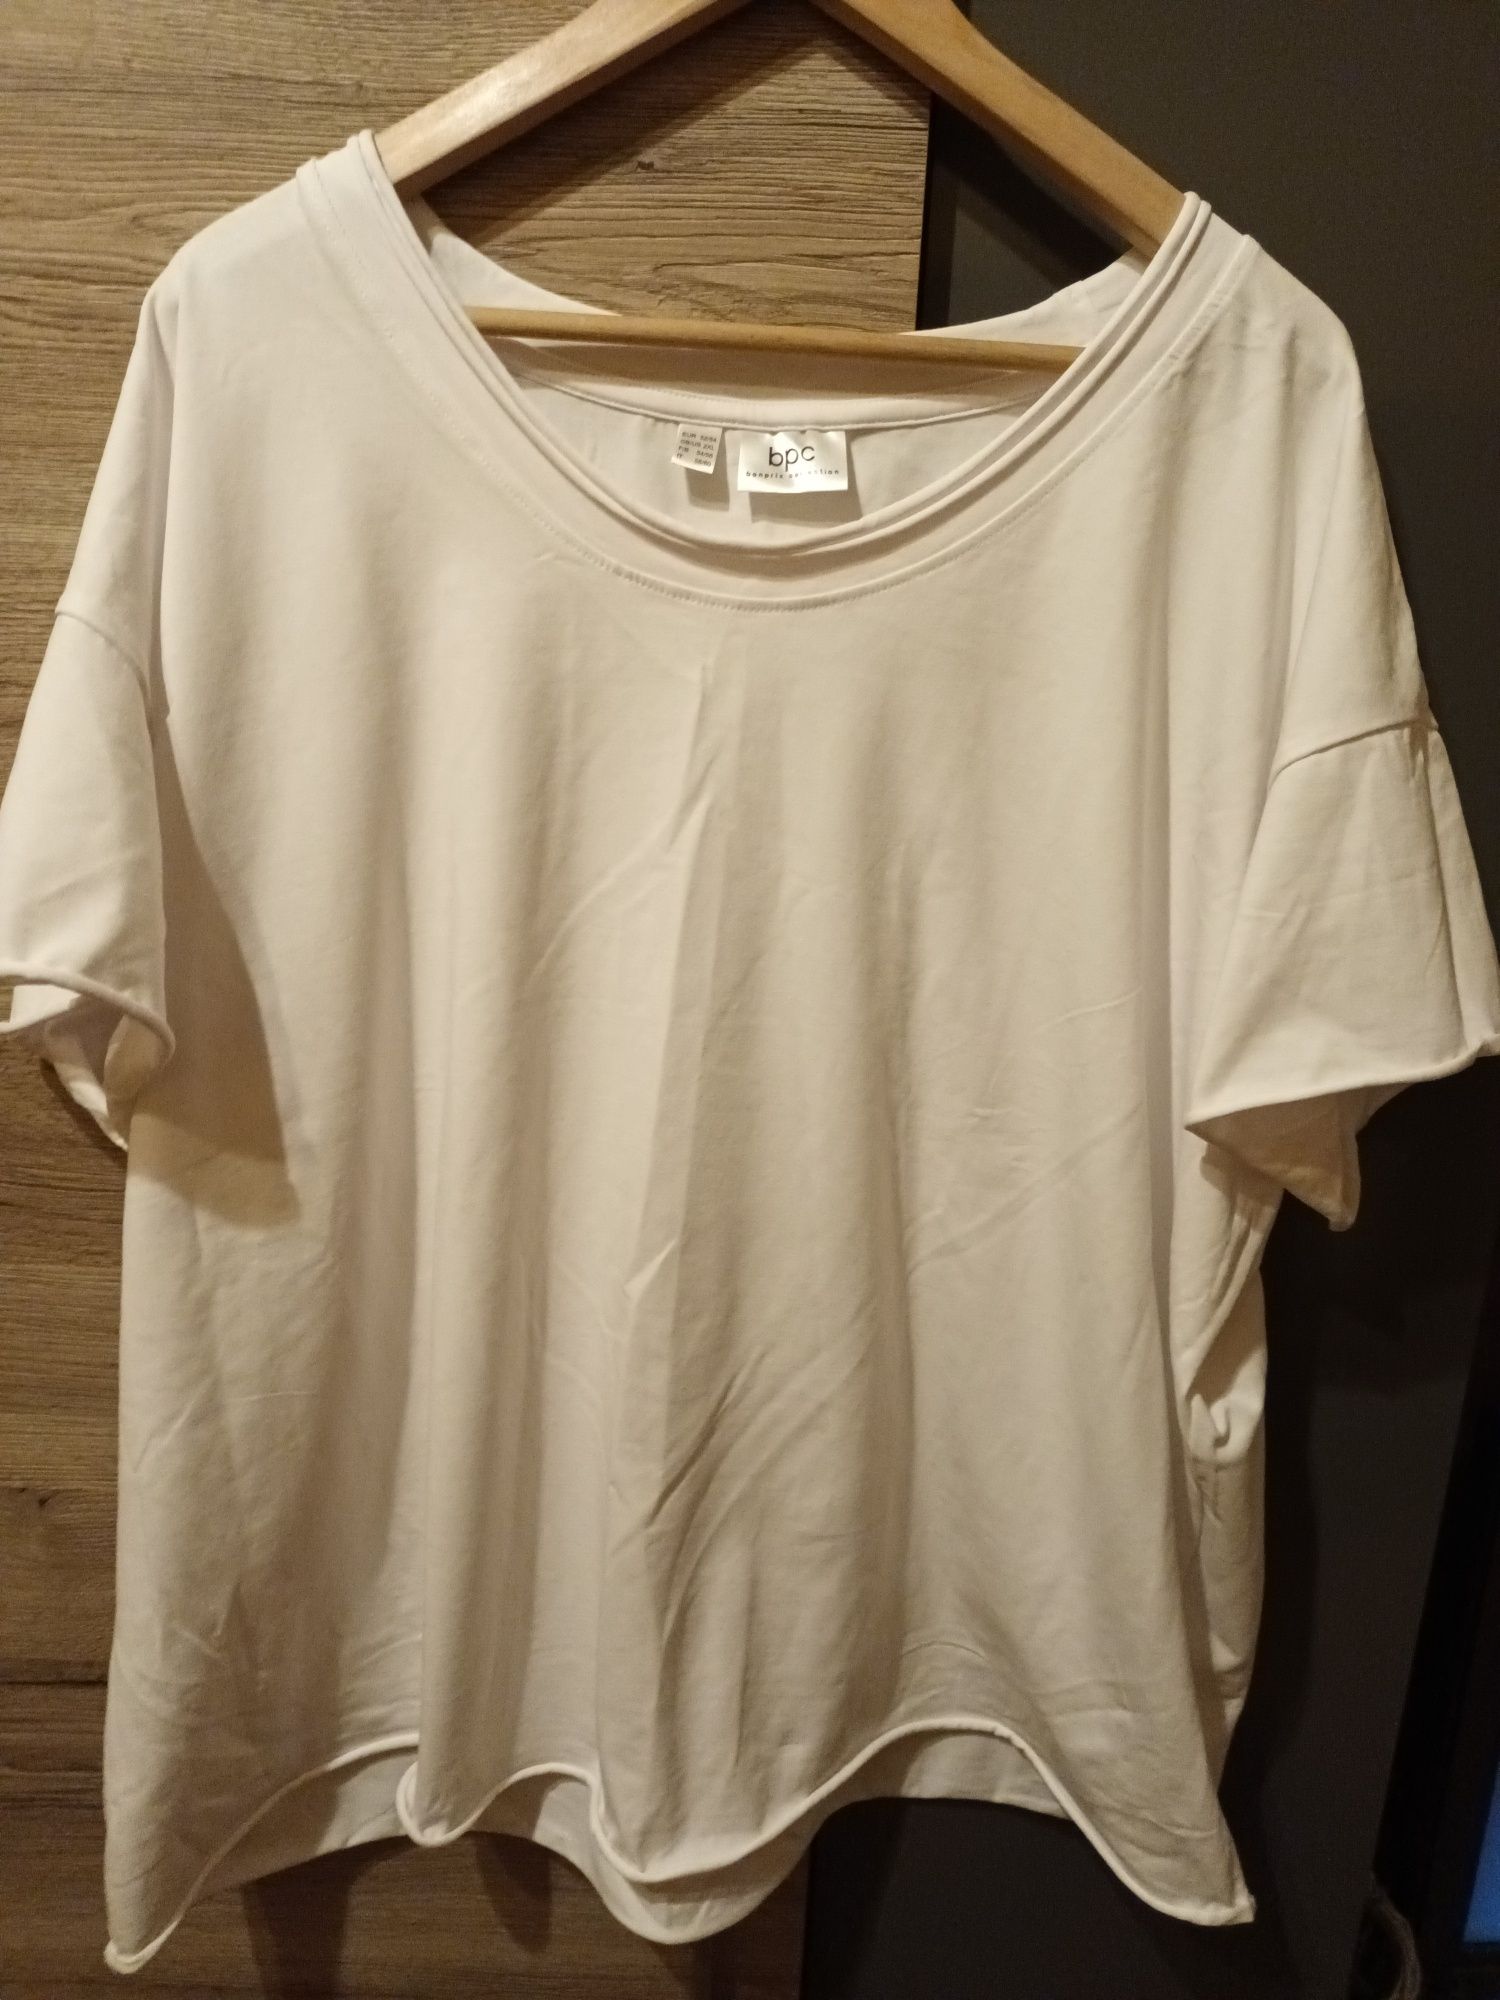 Śliczna damska koszulka T-shirt BONPRIX NOWA